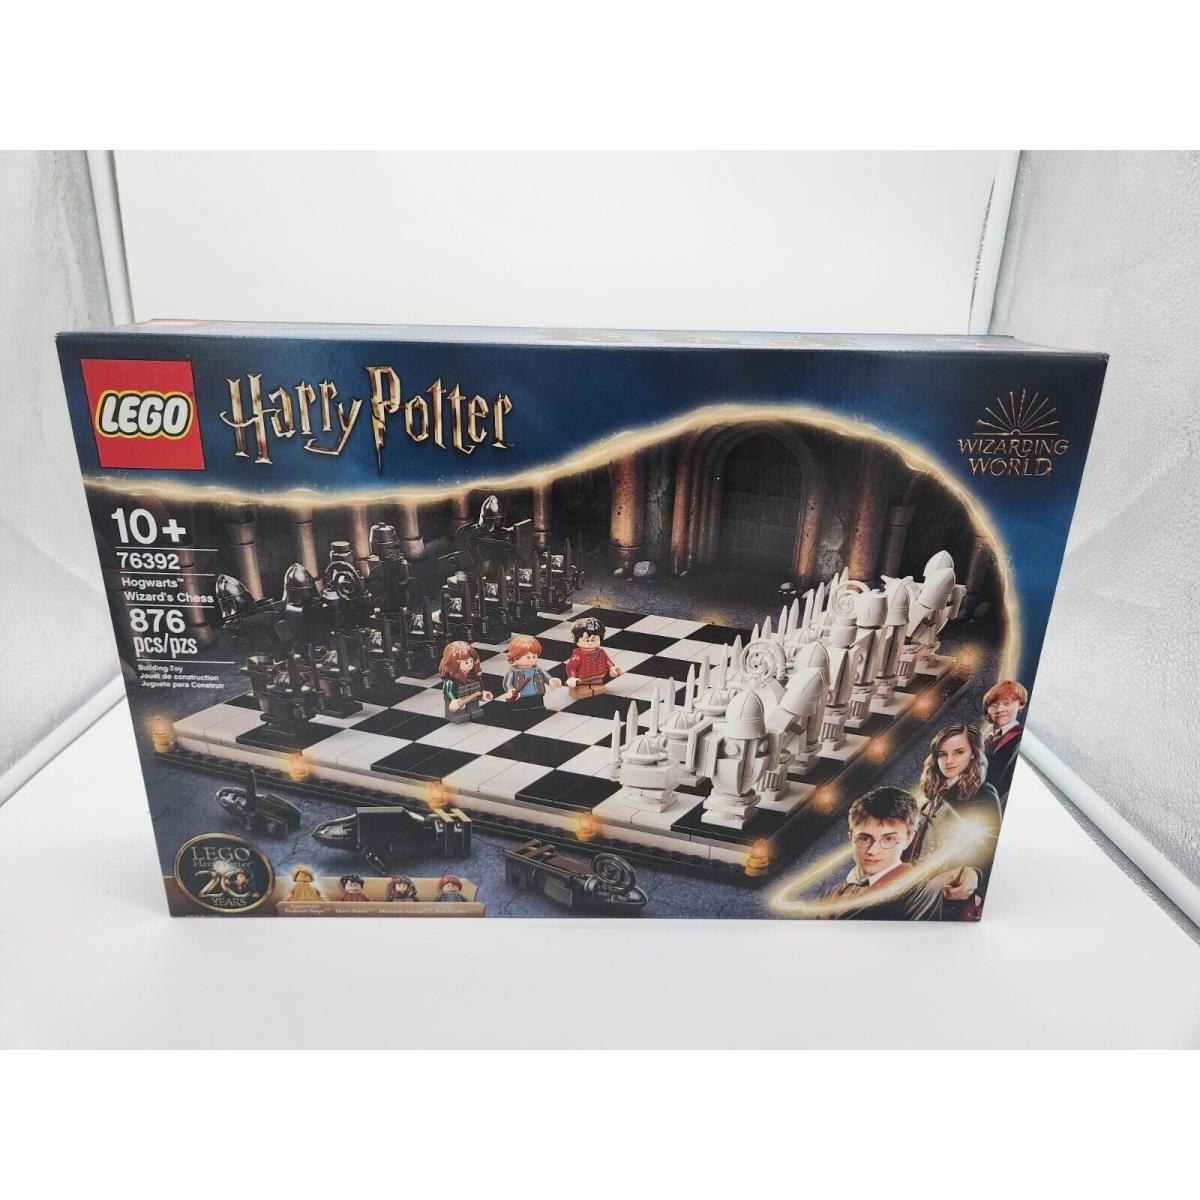 Retired Set Lego Harry Potter Hogwarts Wizard s Chess 76392